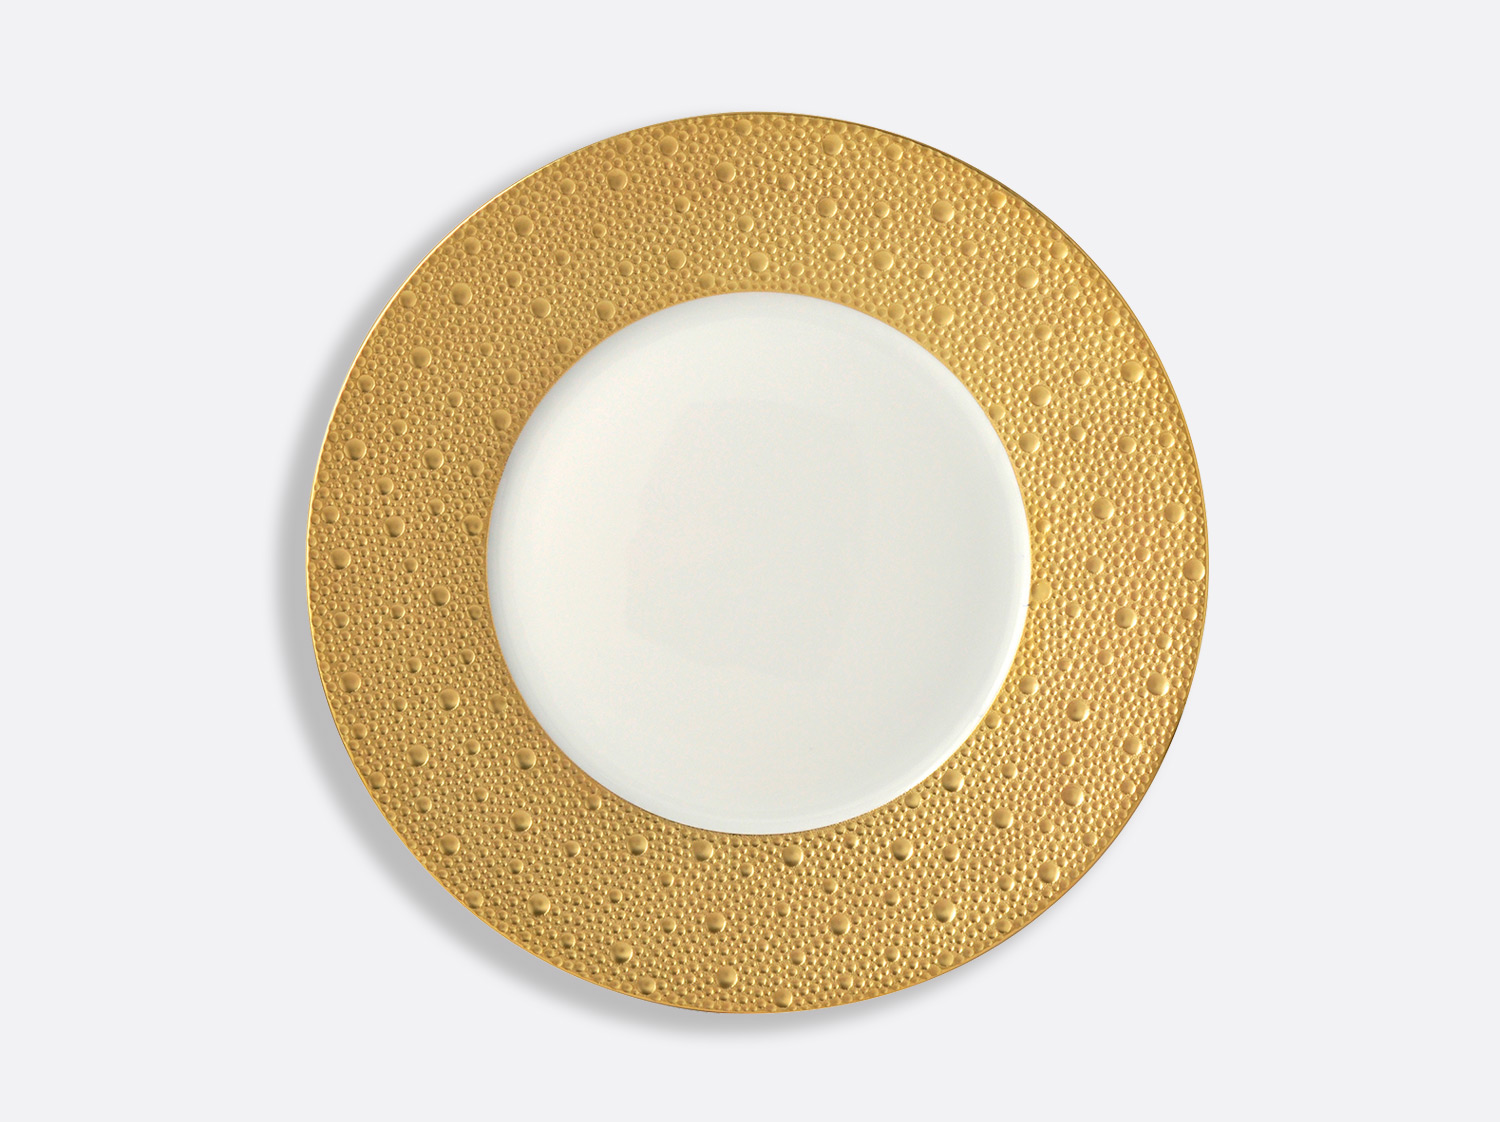 China Plate 10.5'' of the collection Ecume gold | Bernardaud